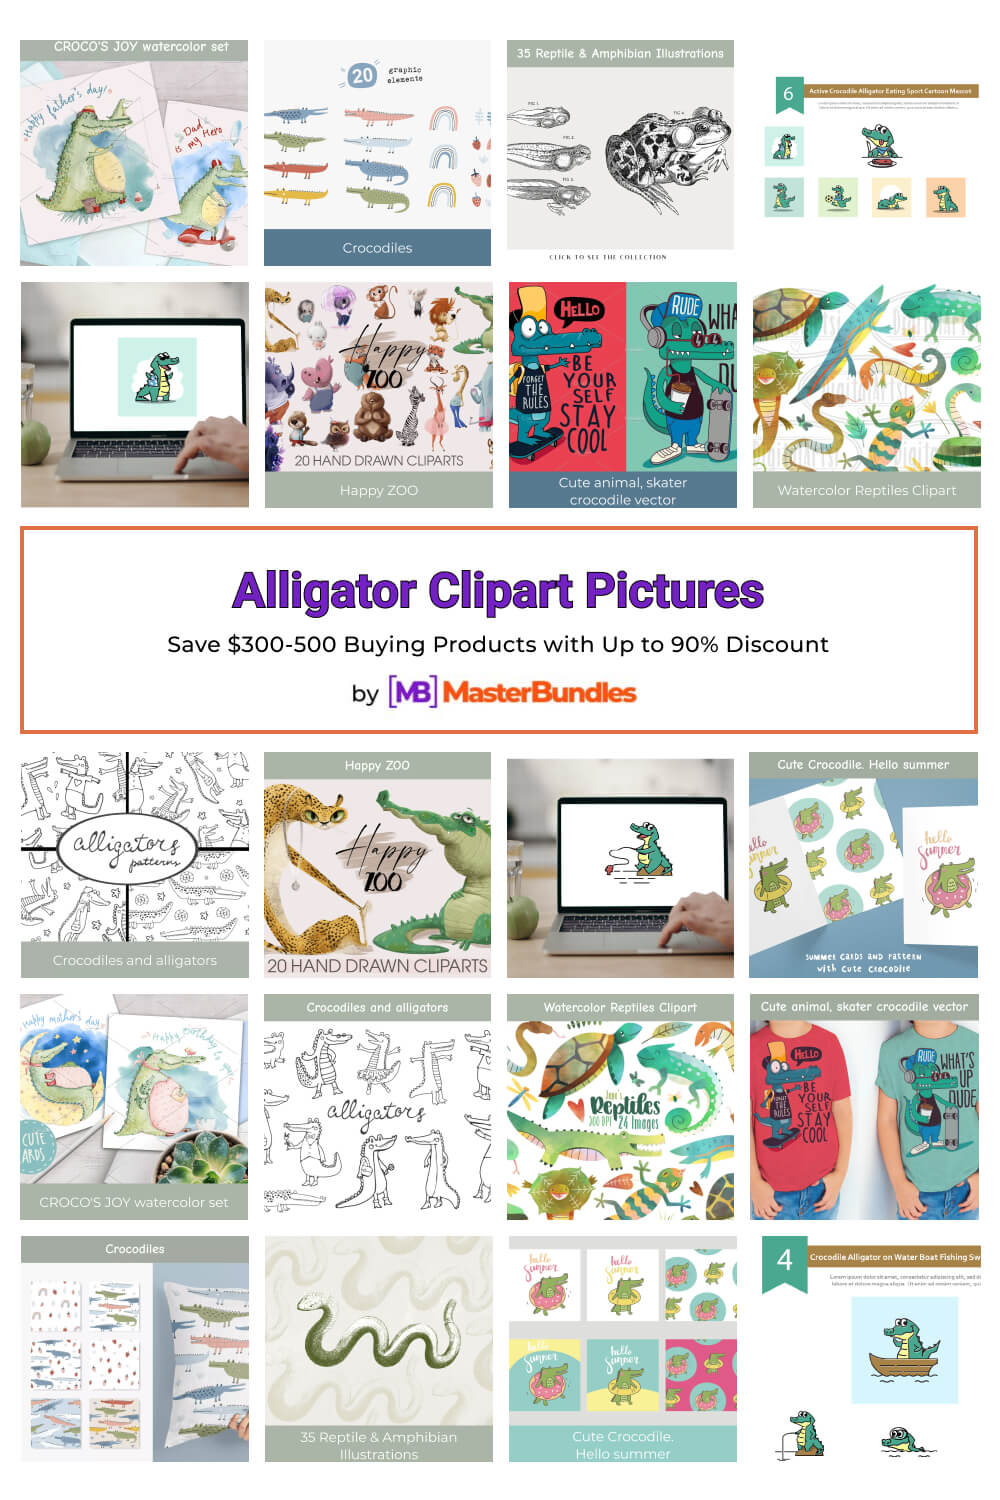 alligator clipart pictures pinterest image.